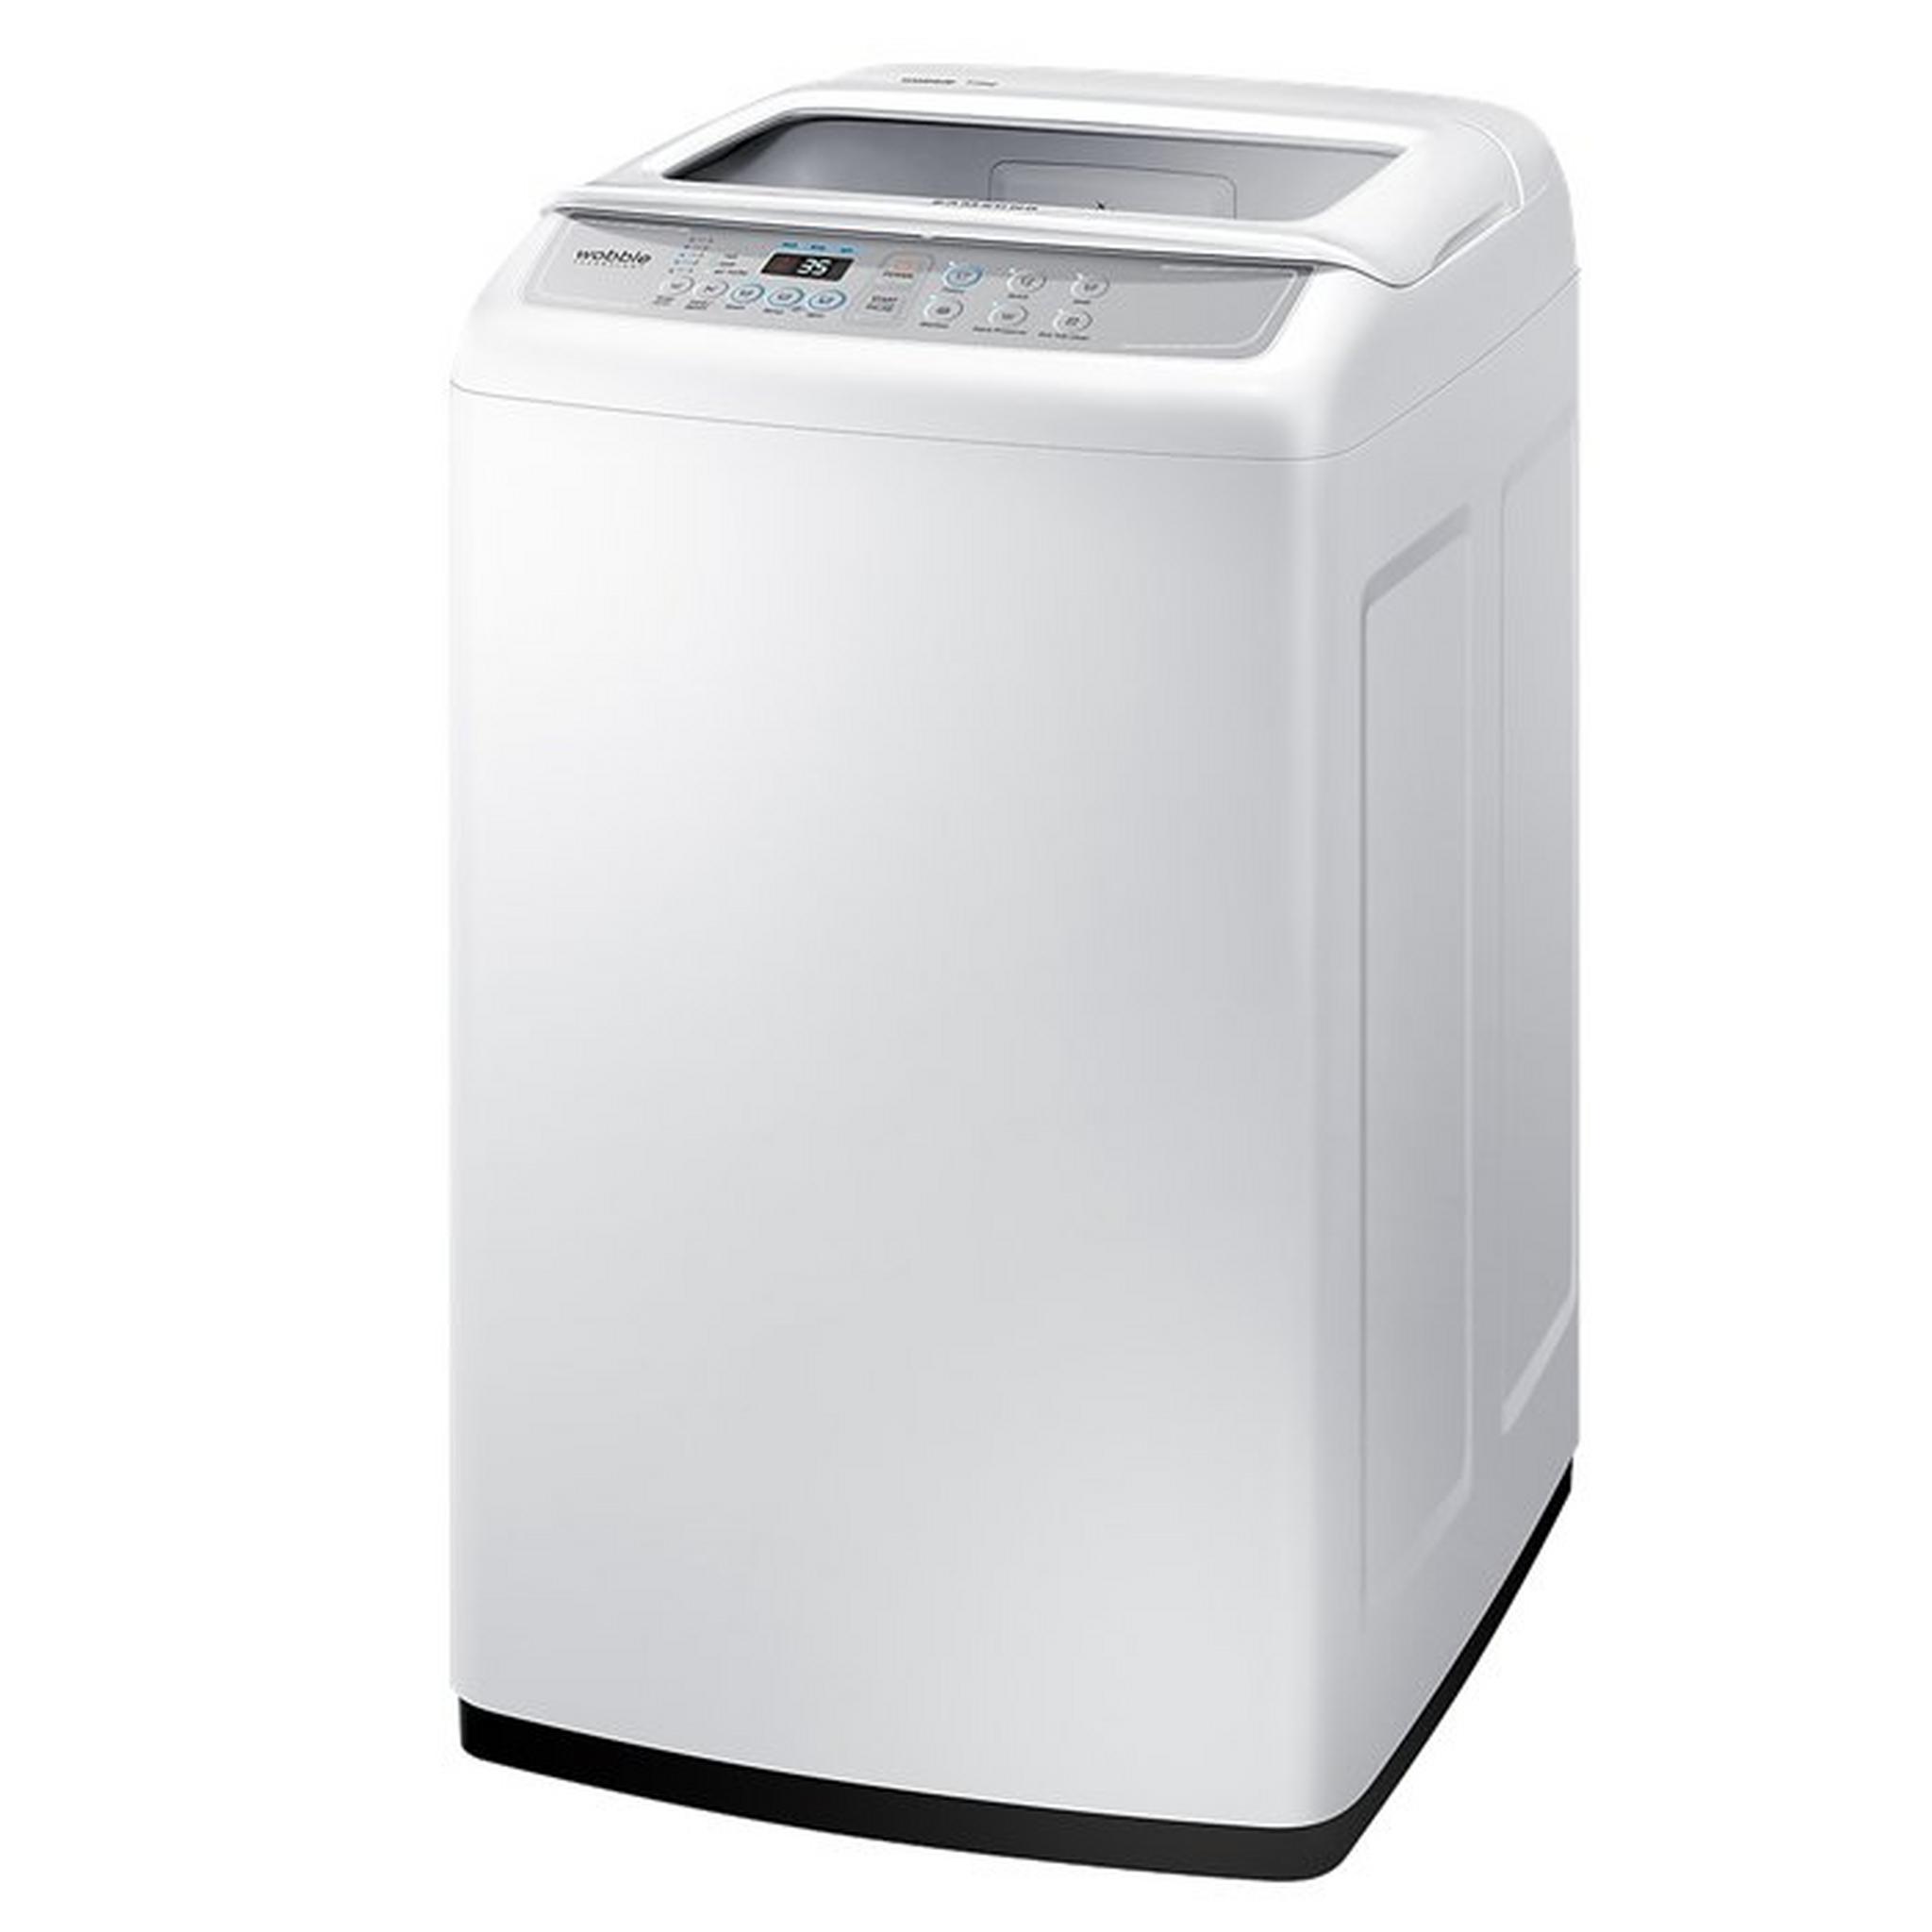 Samsung 7 Kg Top Load Washing Machine, WA70H4200SW – White